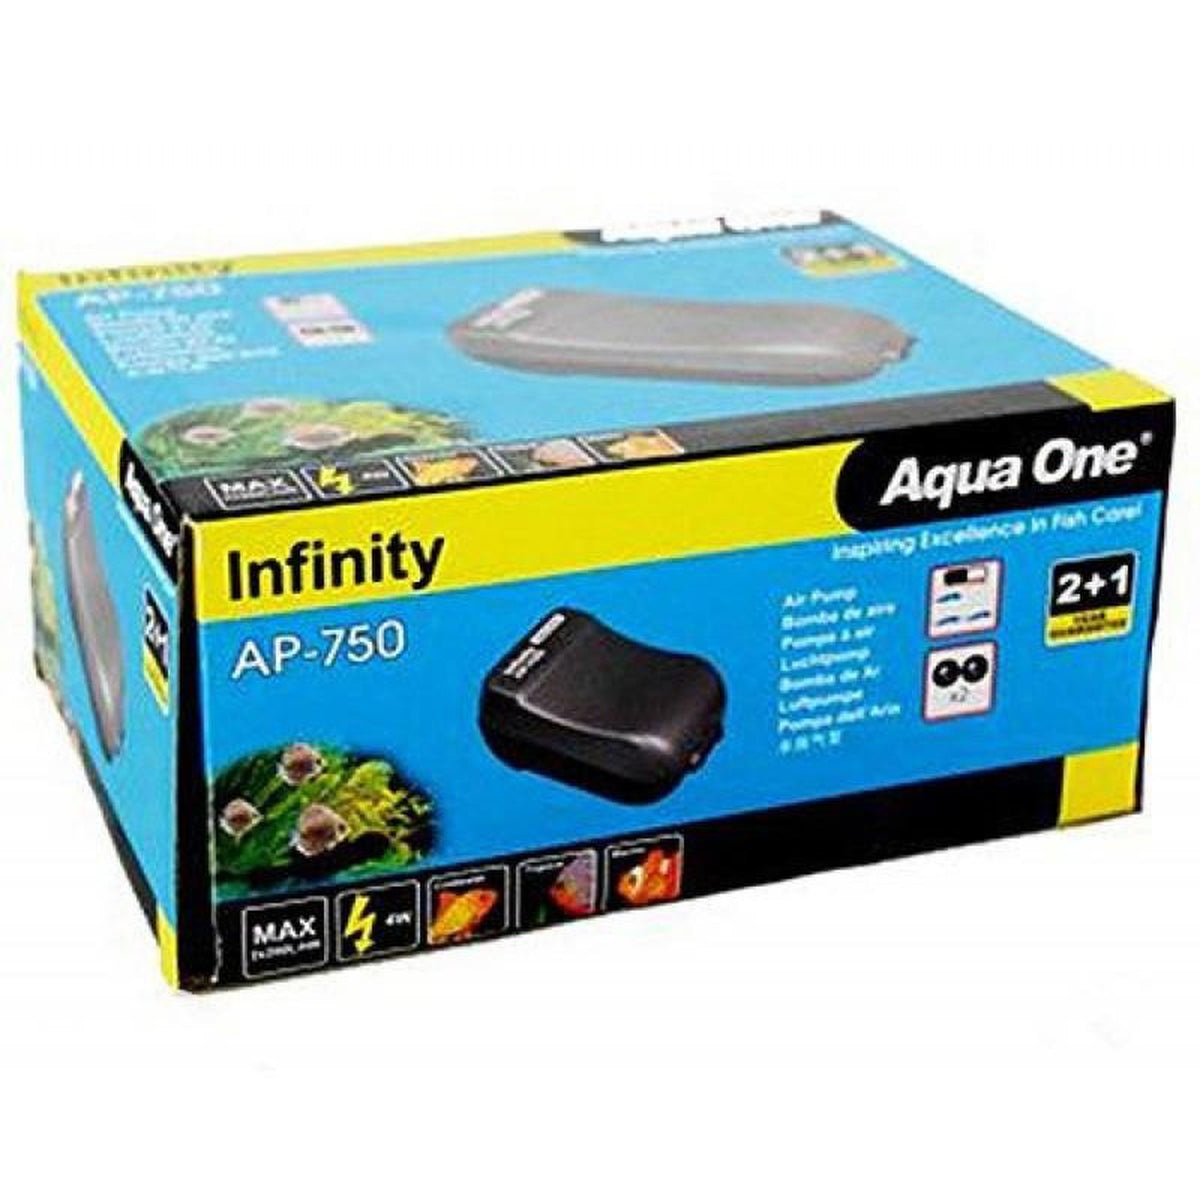 Aqua One Infinity Air Pump Range